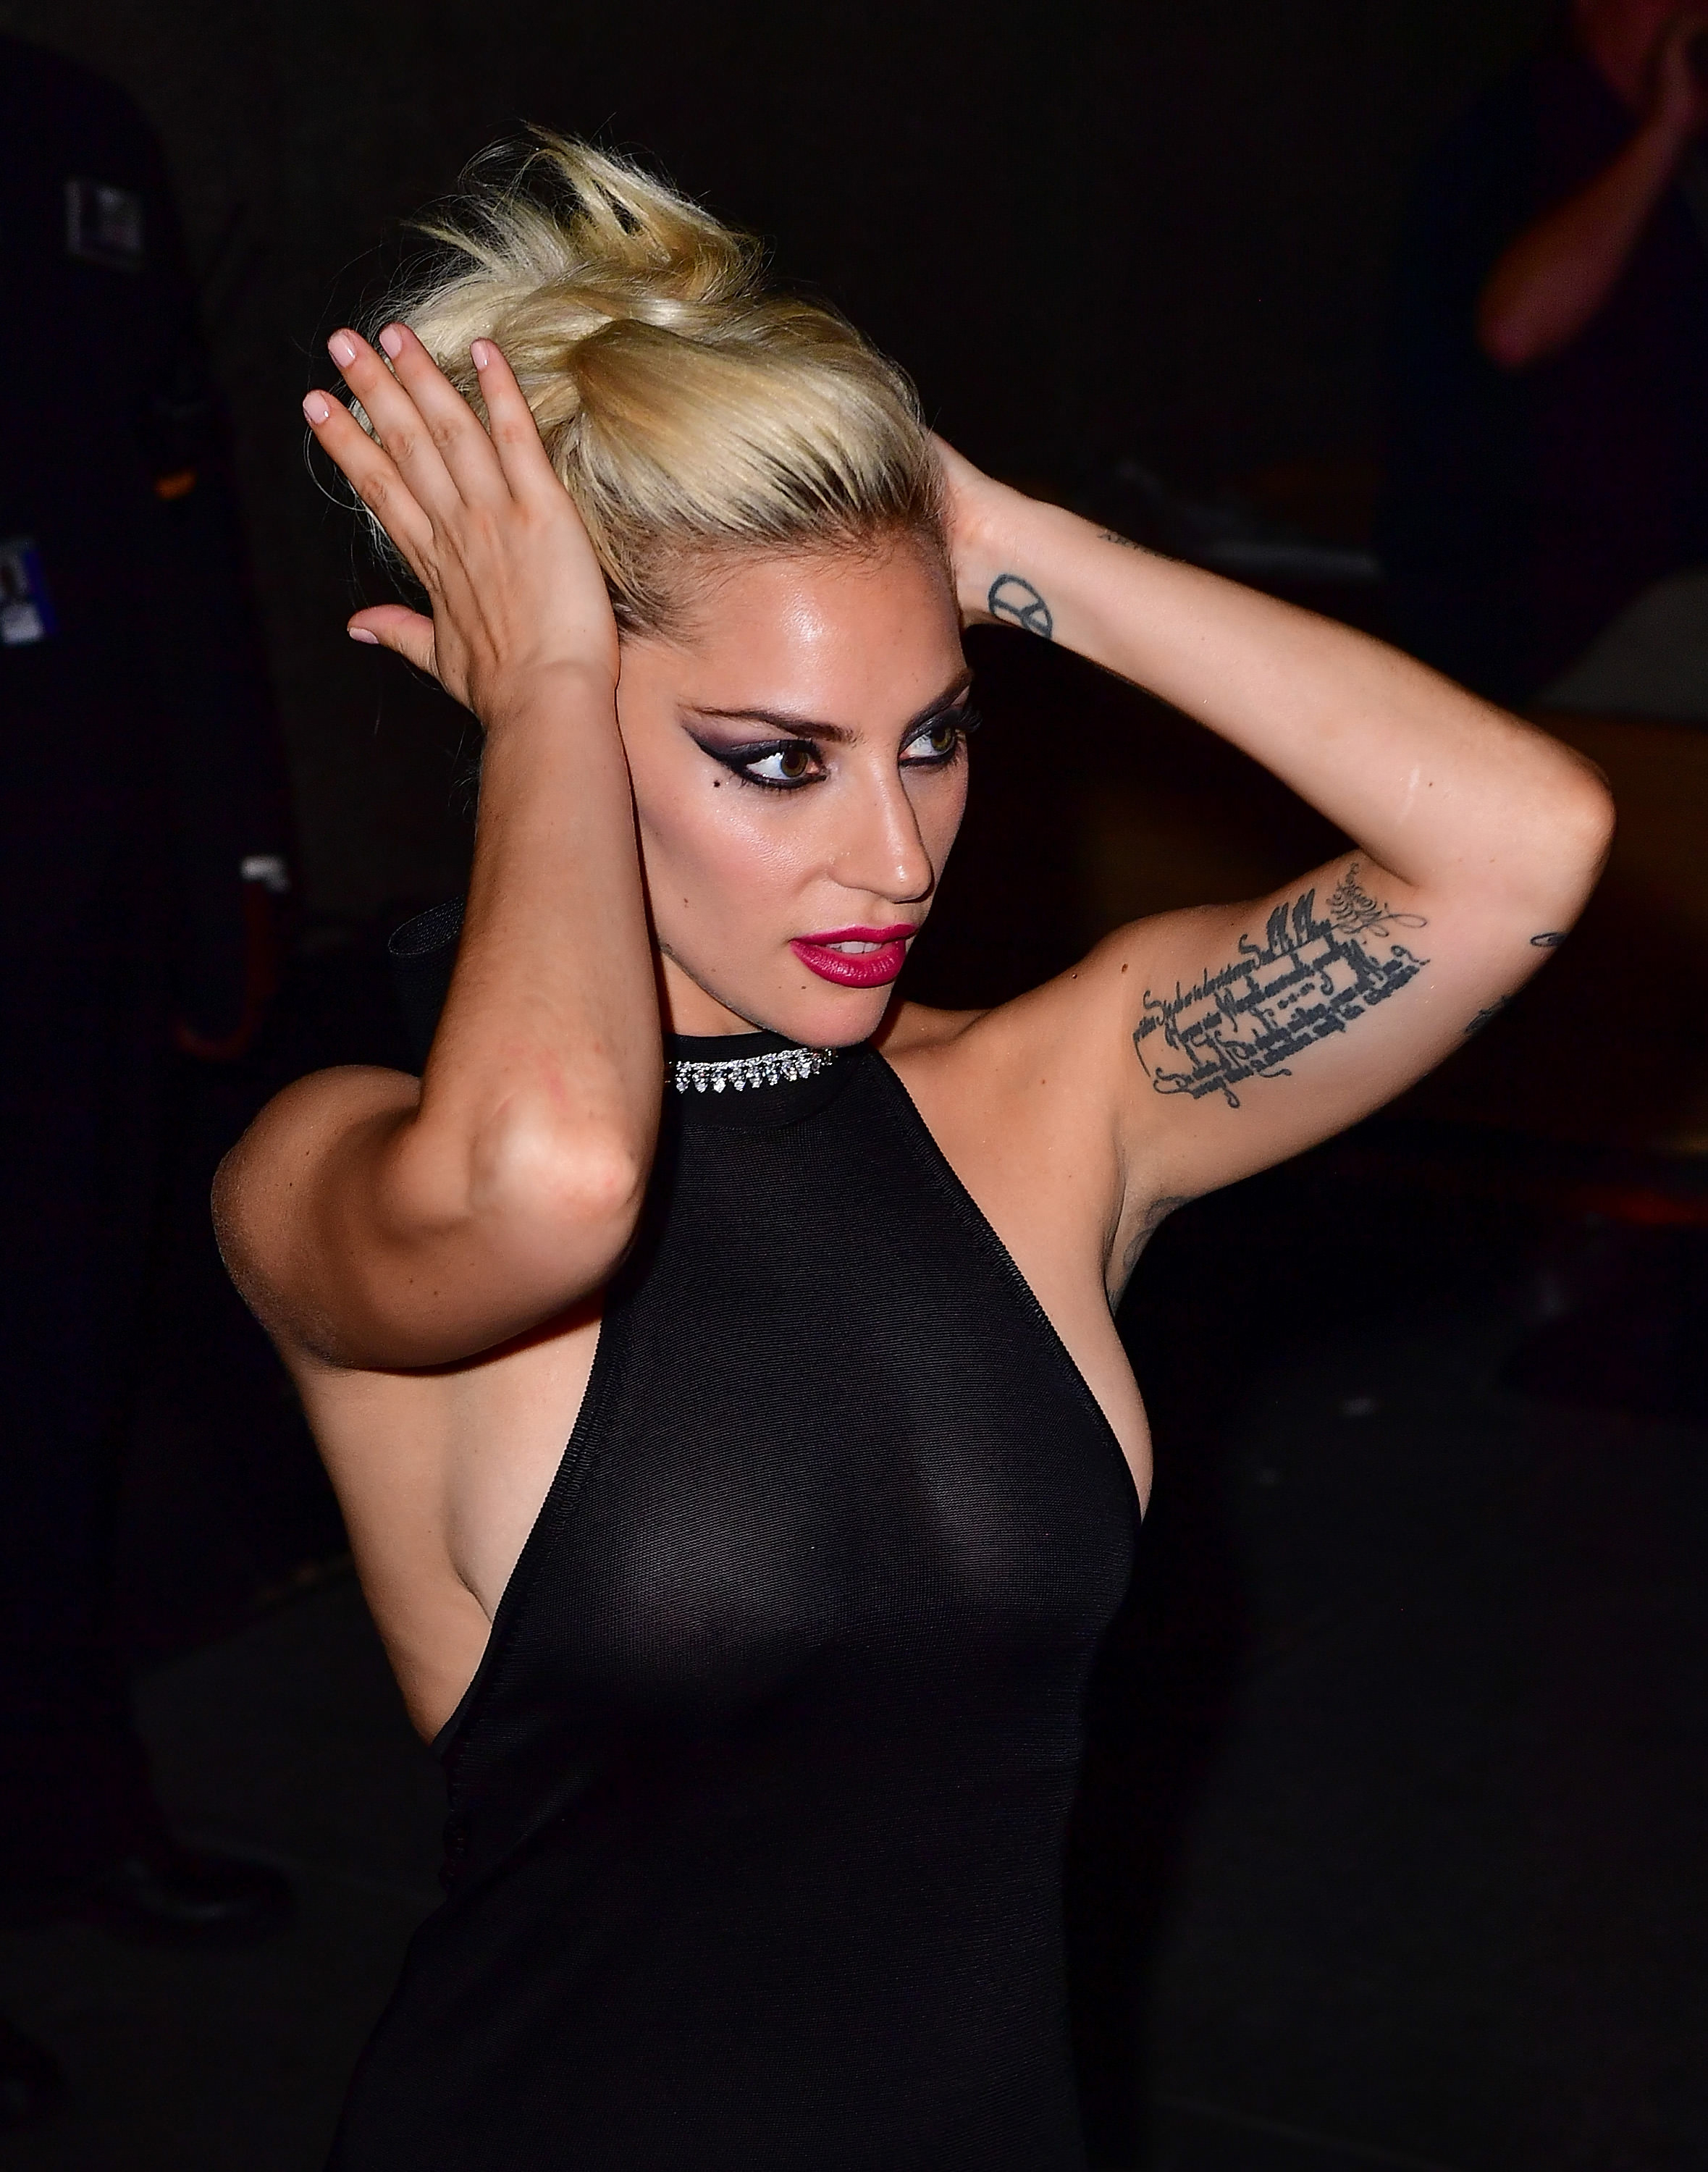 Lady Gaga Nipples In See Through Dress [3 New Pics]